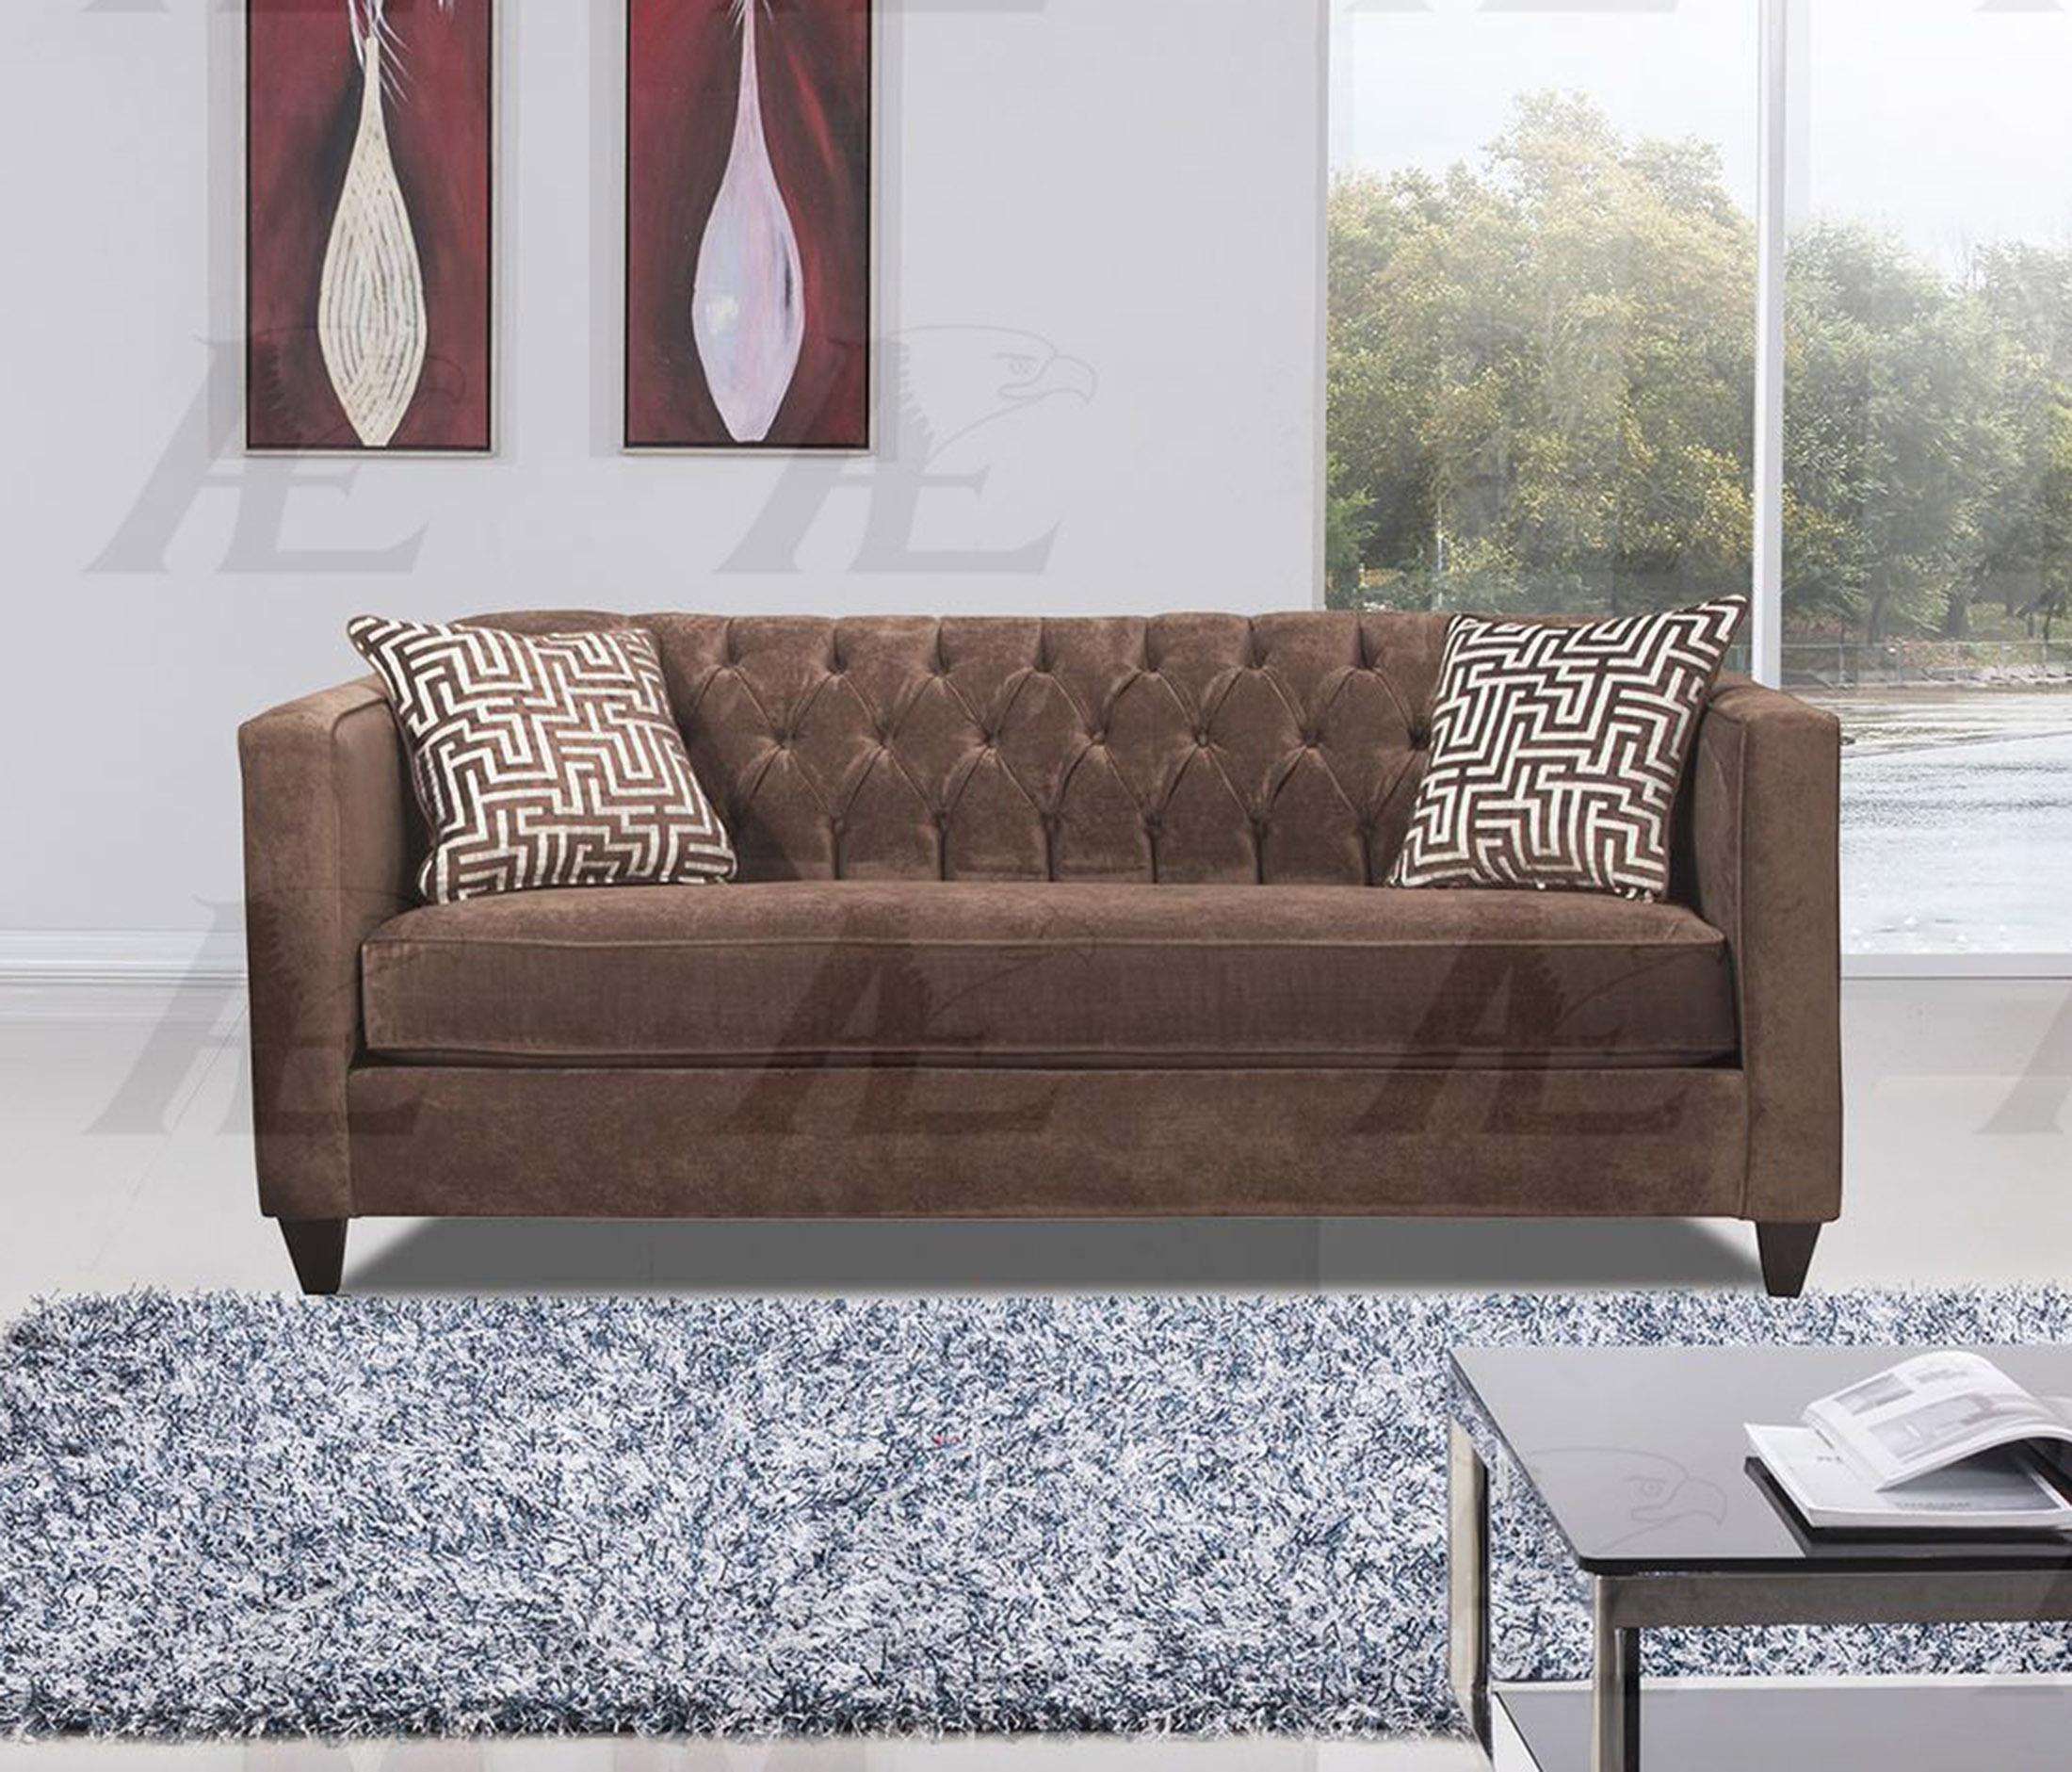 

    
American Eagle Furniture AE2602-BR Brown Tufted Sofa  Fabric Contemporary
